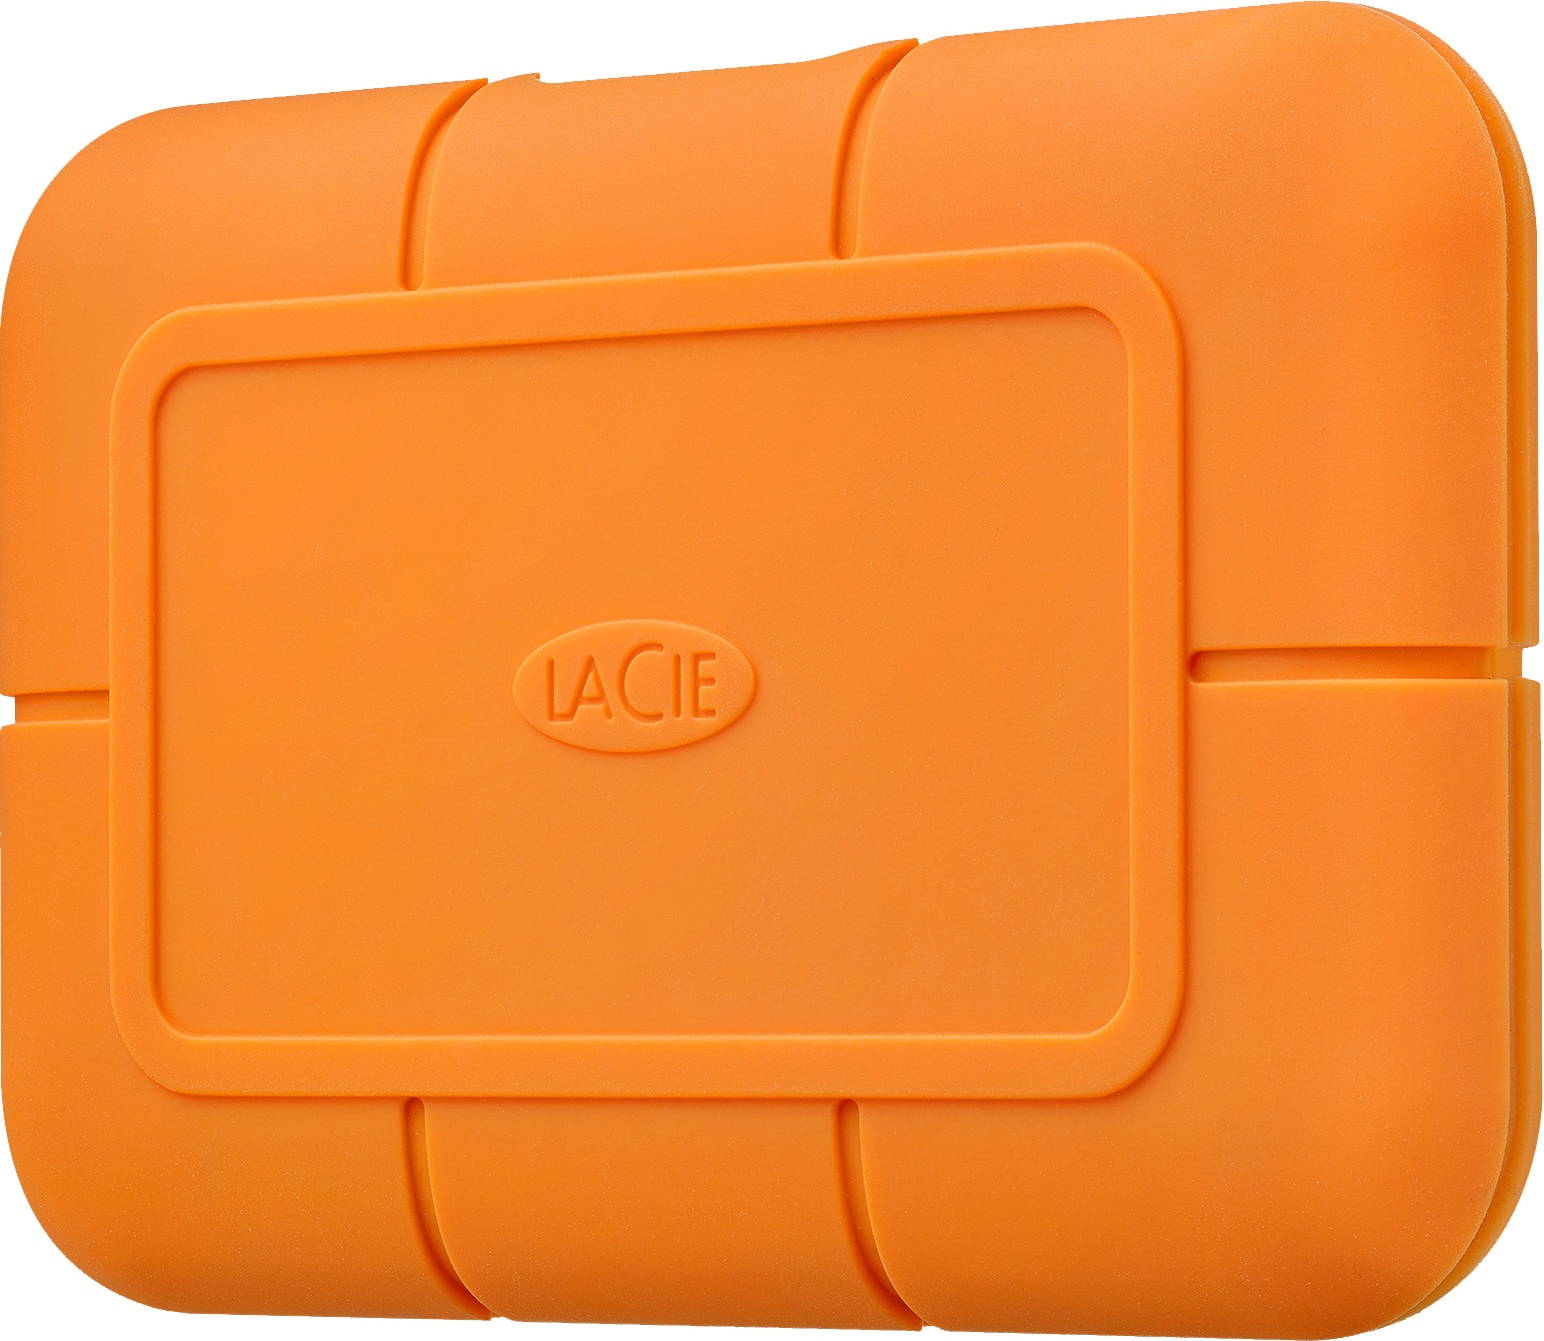 LaCie Rugged SSD 500 GB ulkoinen kovalevy (oranssi) - Gigantti verkkokauppa